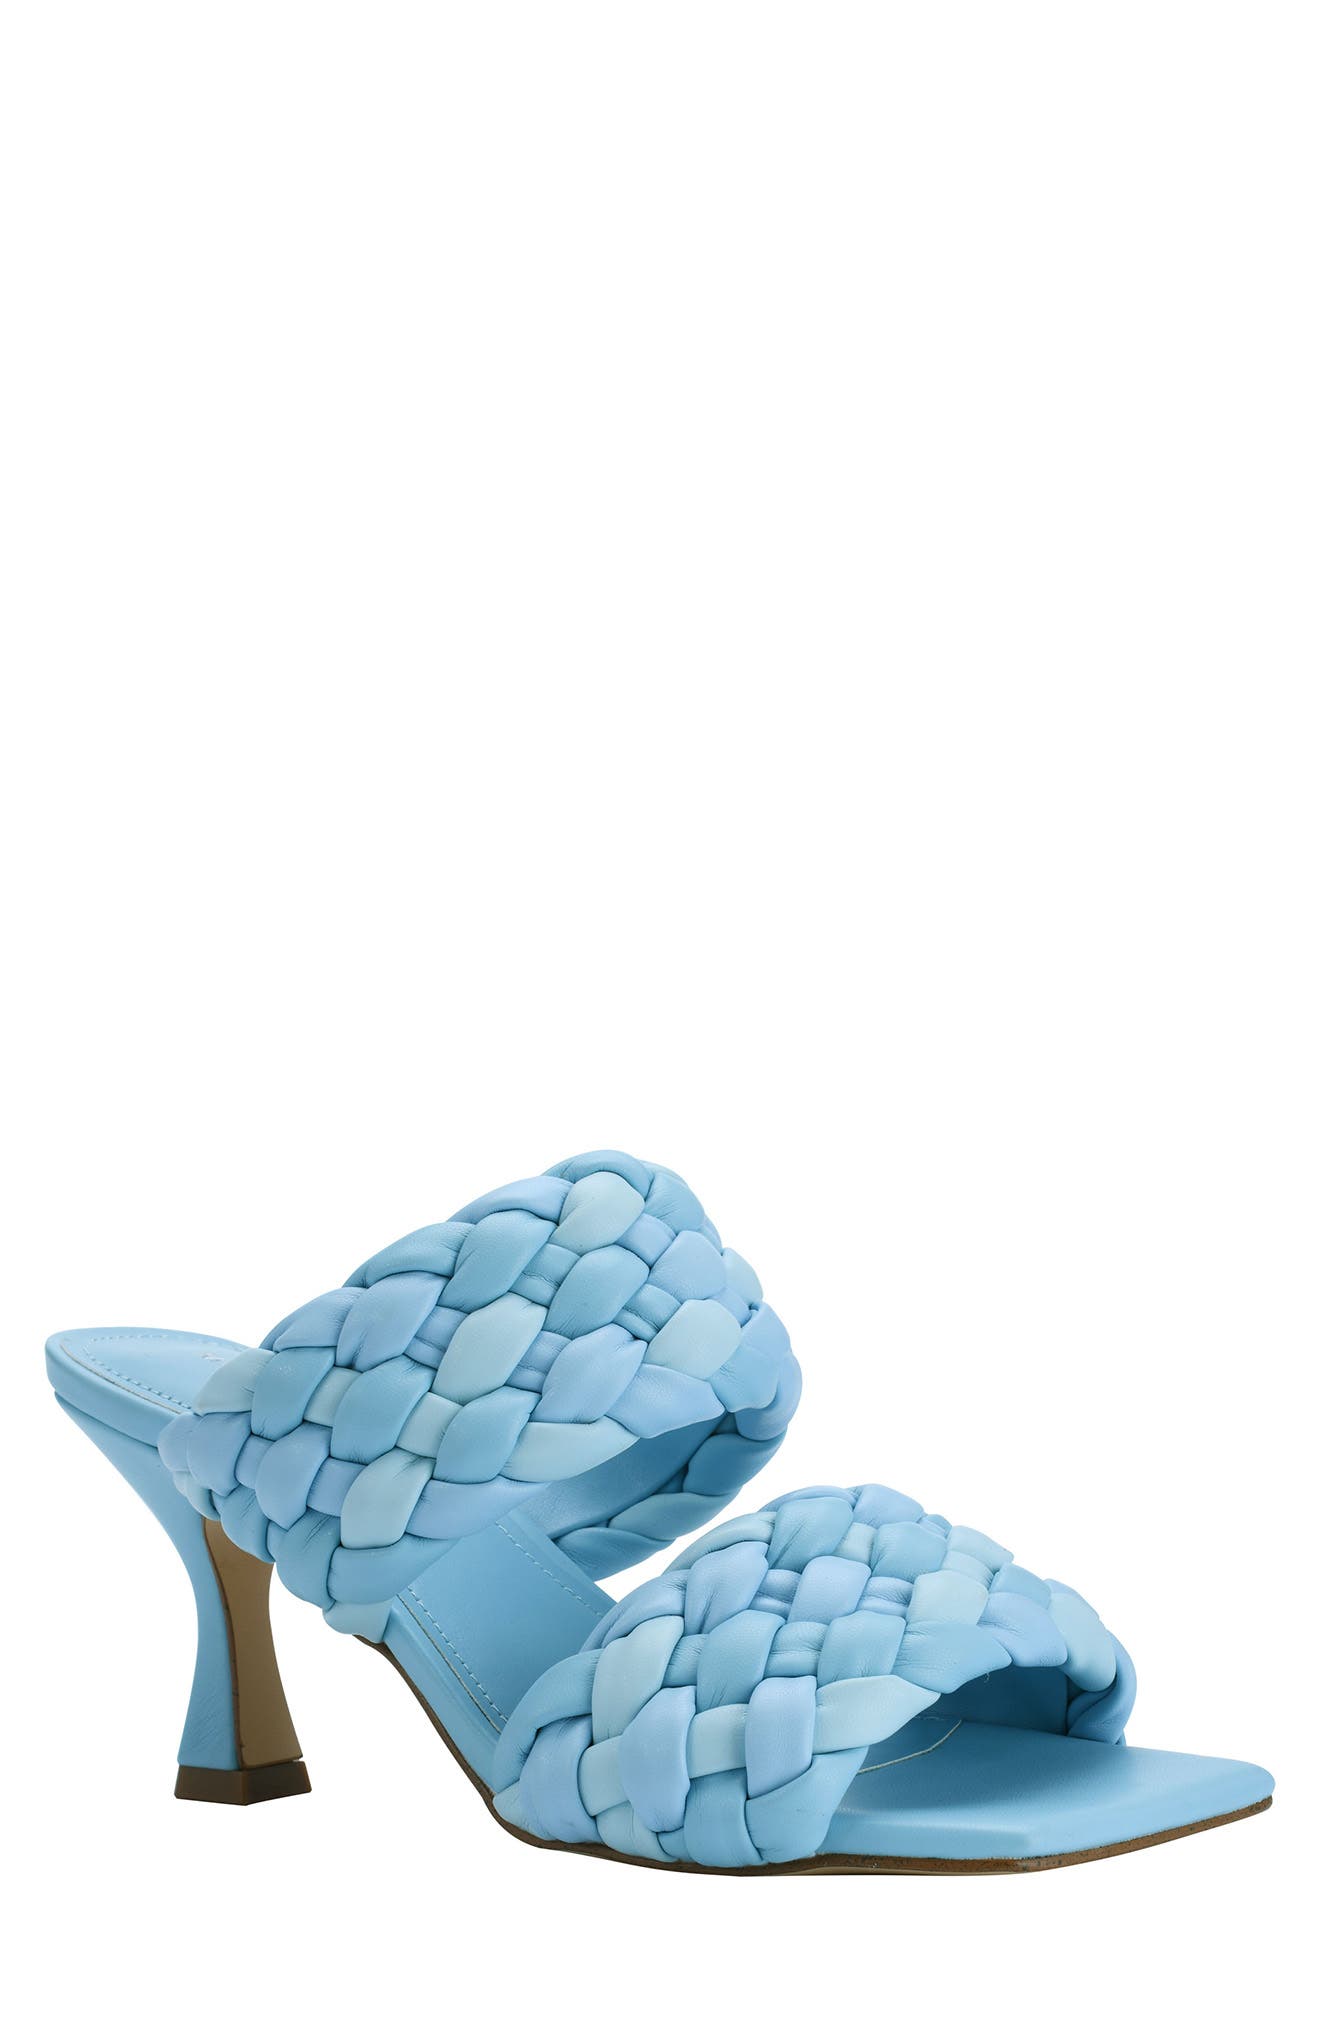 MARC FISHER Sandals for Women | ModeSens